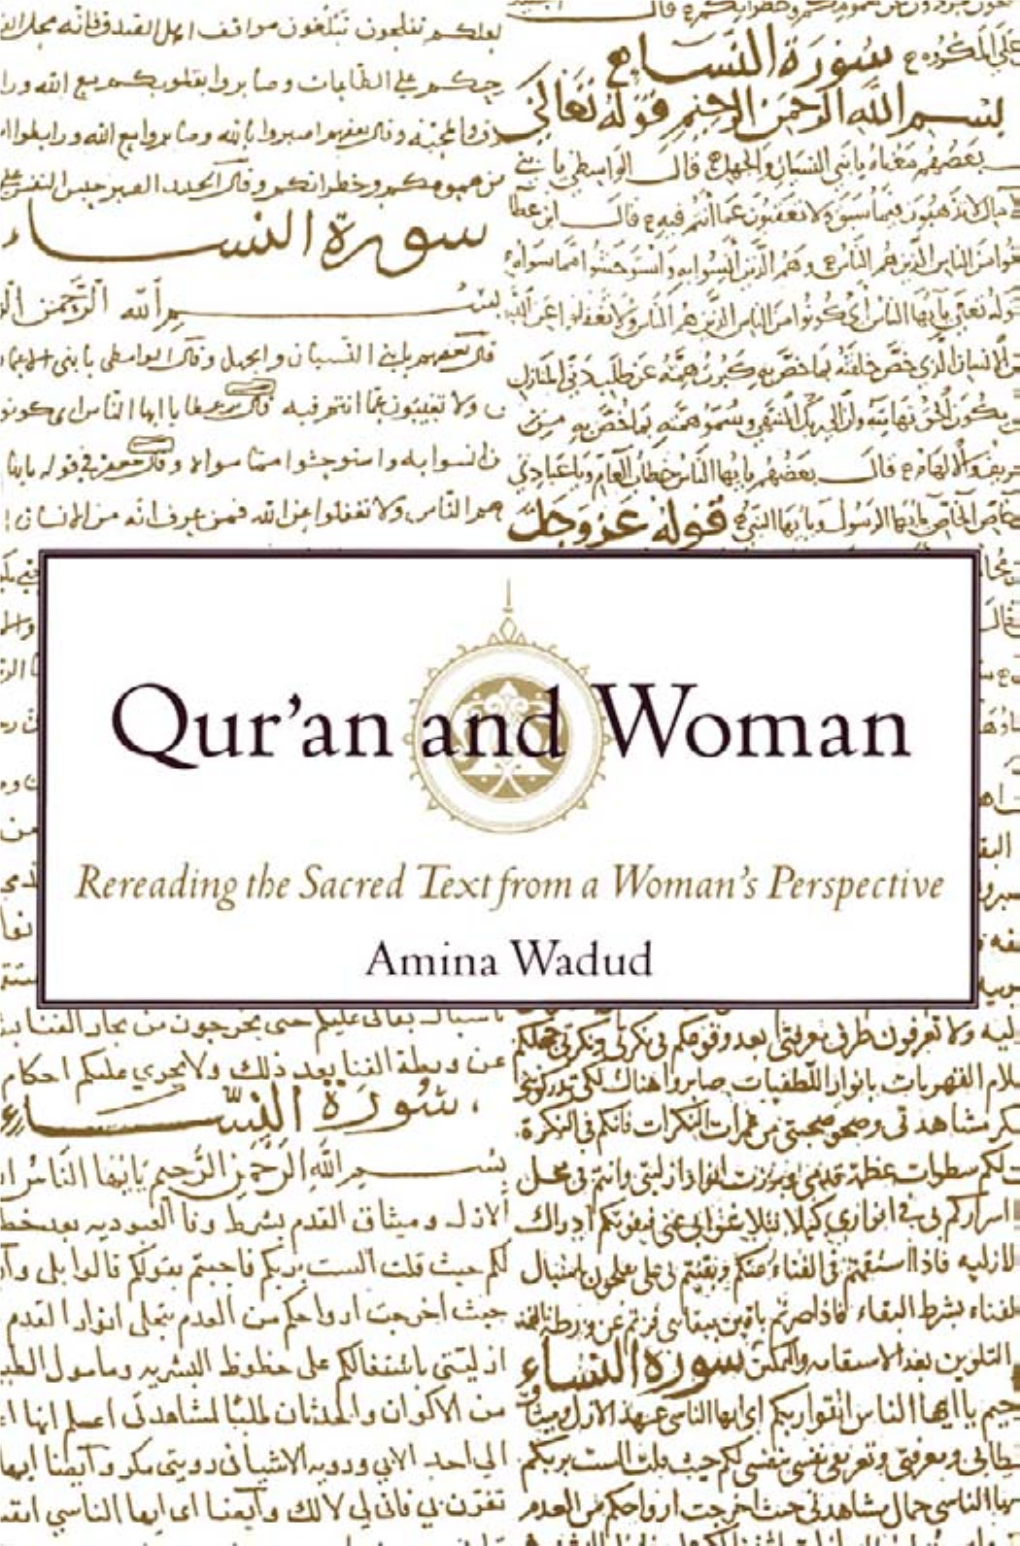 Wadud Amina Qur'an and Women.Pdf